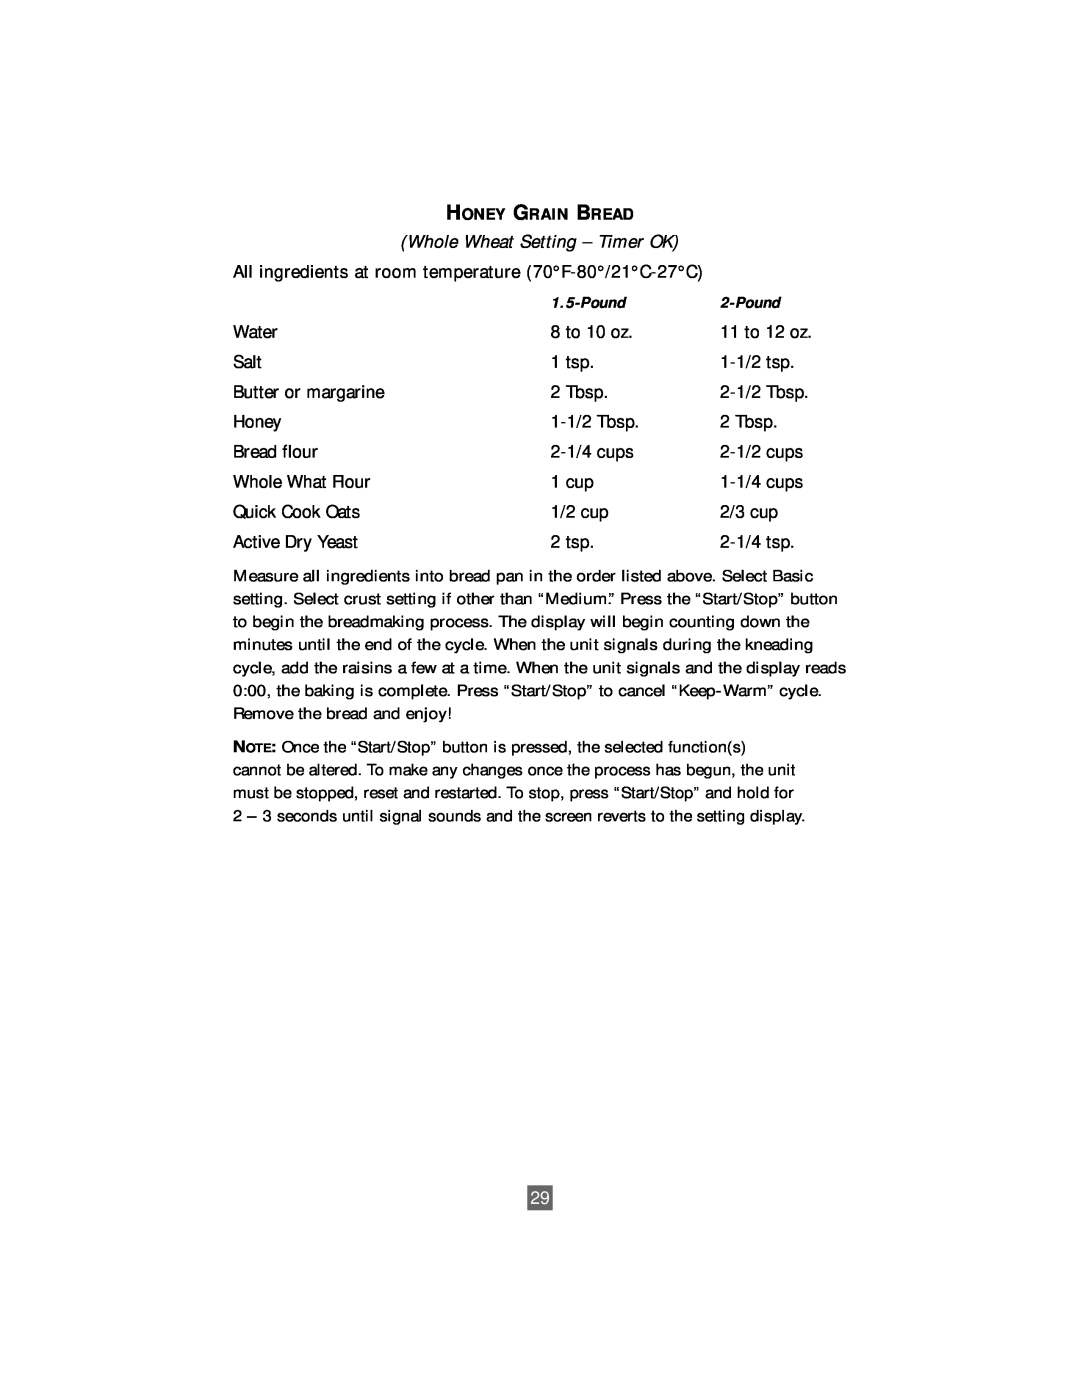 Oster P. N. 101017 manual Whole Wheat Setting - Timer OK, Honey Grain Bread 